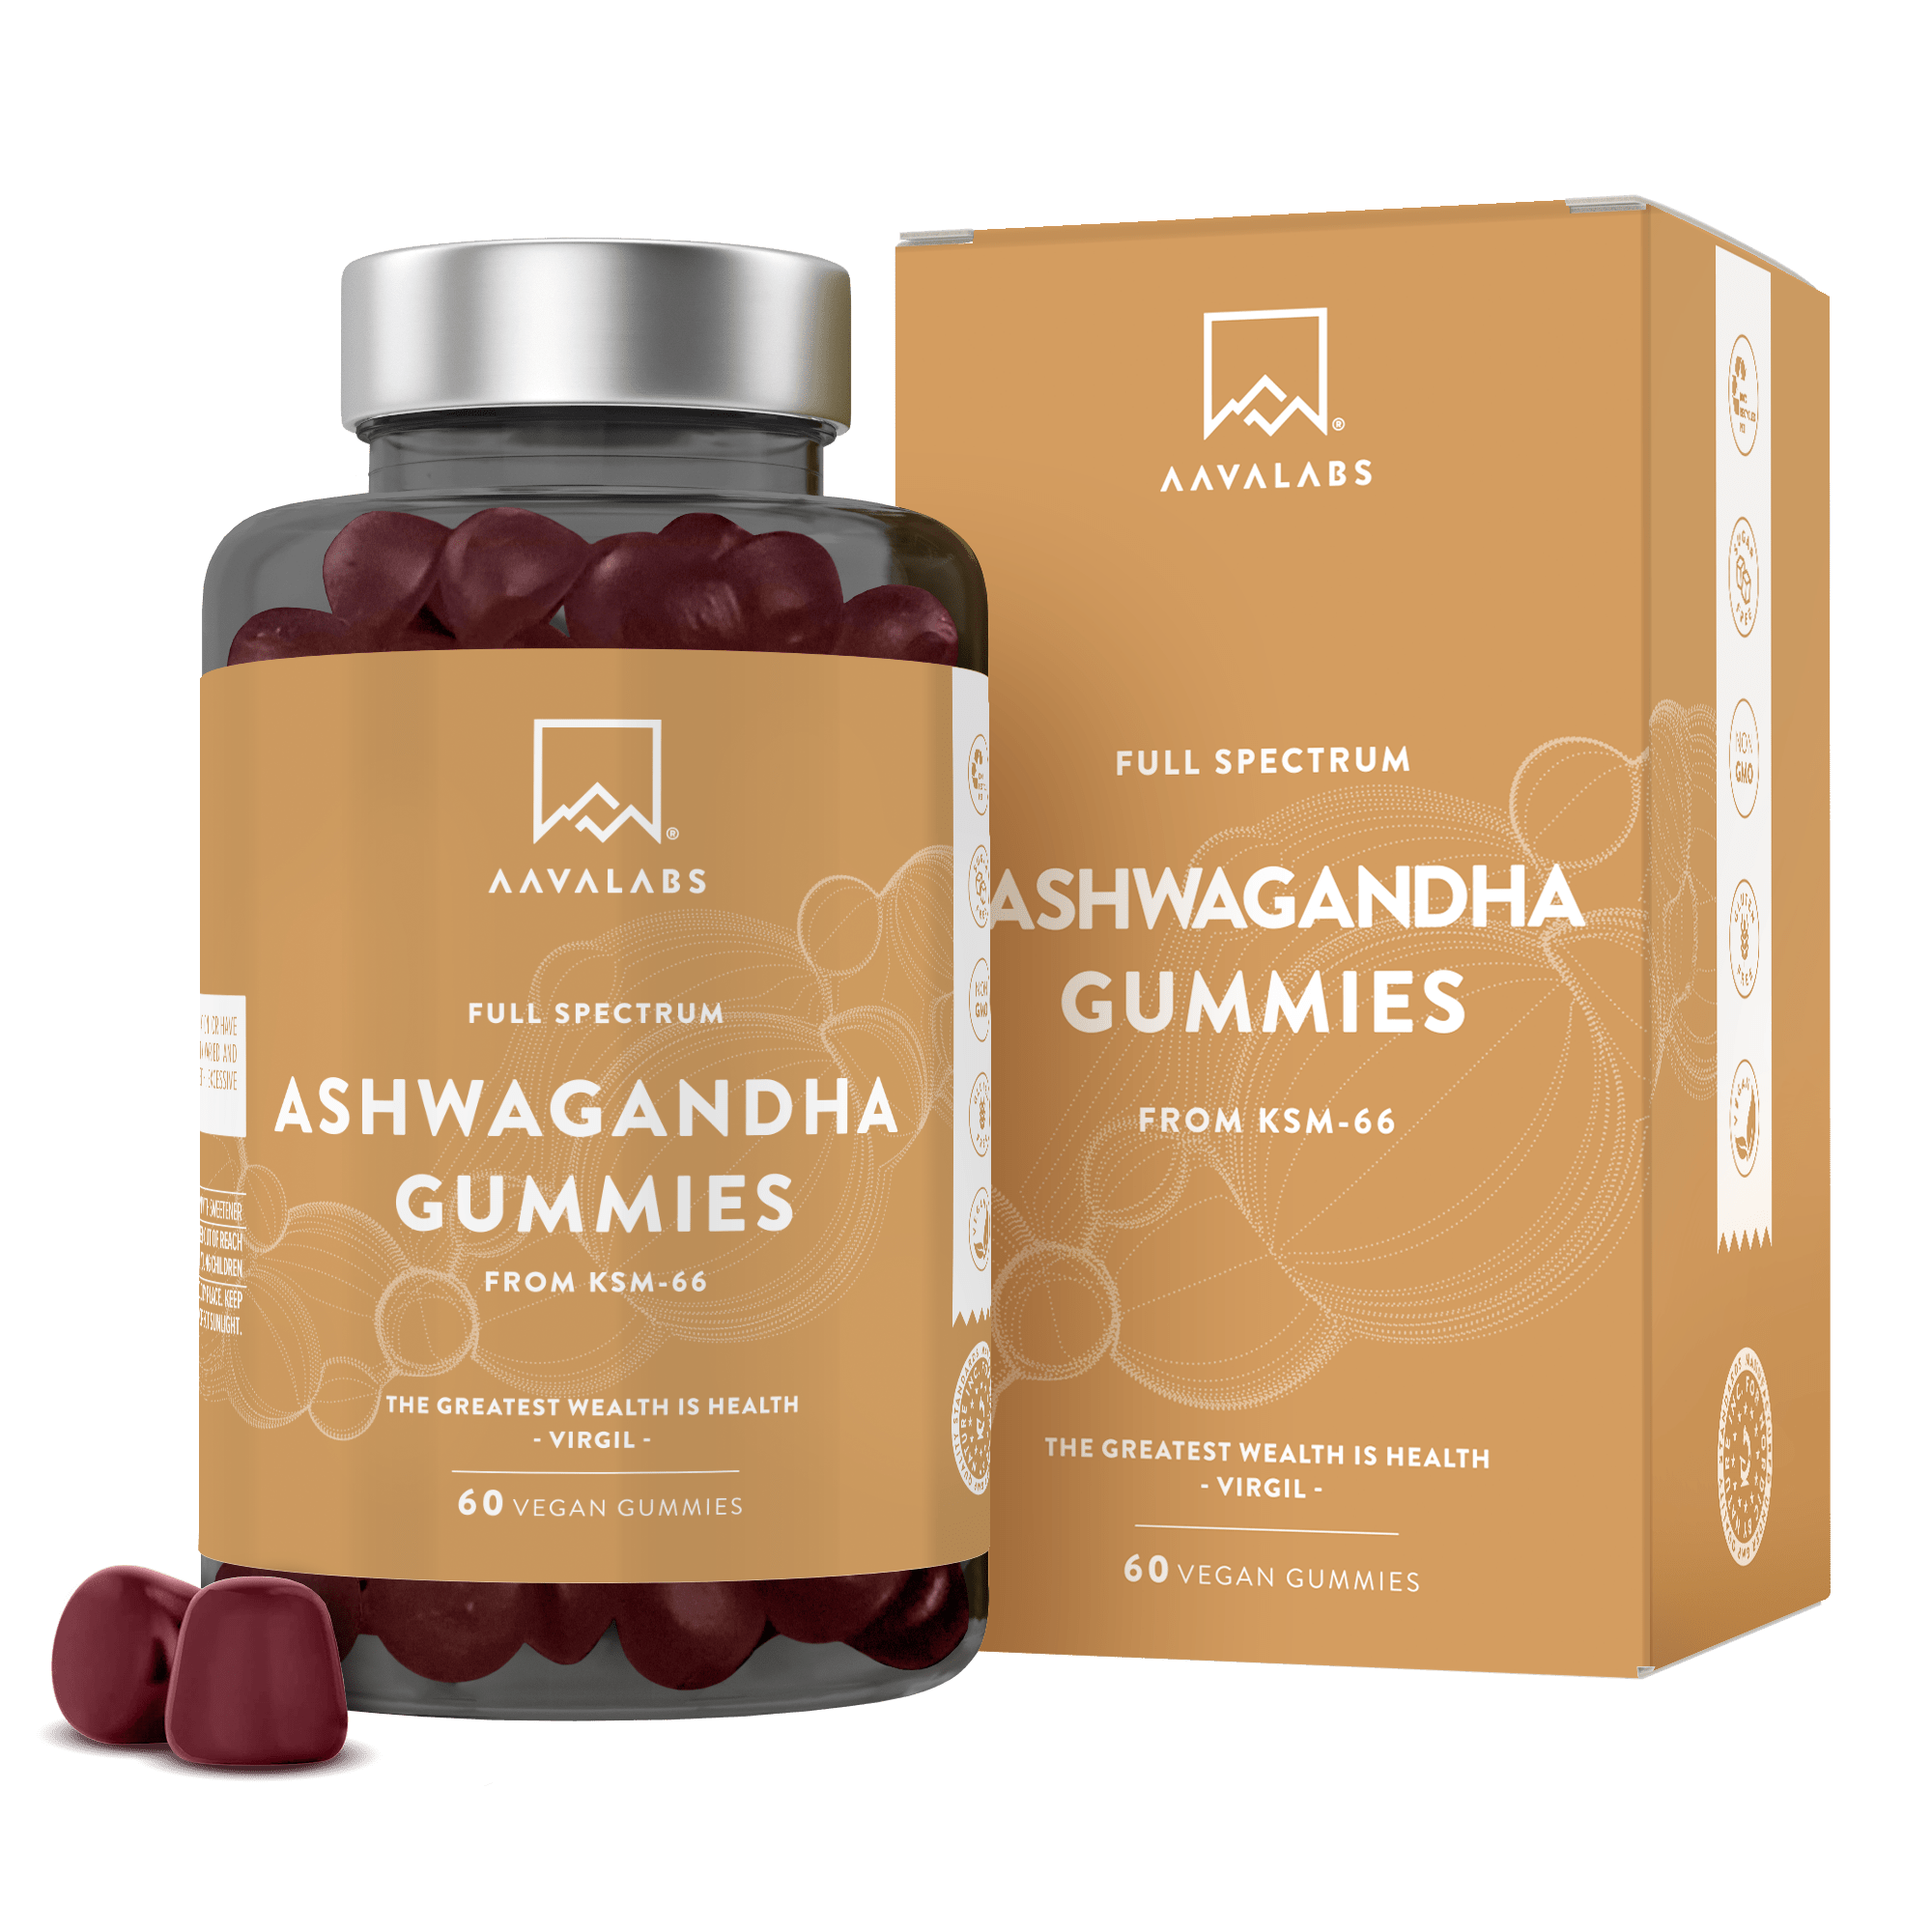 Bottle and box of Aavalabs Ashwagandha Gummies, full spectrum, 60 vegan gummies - AAVALABS